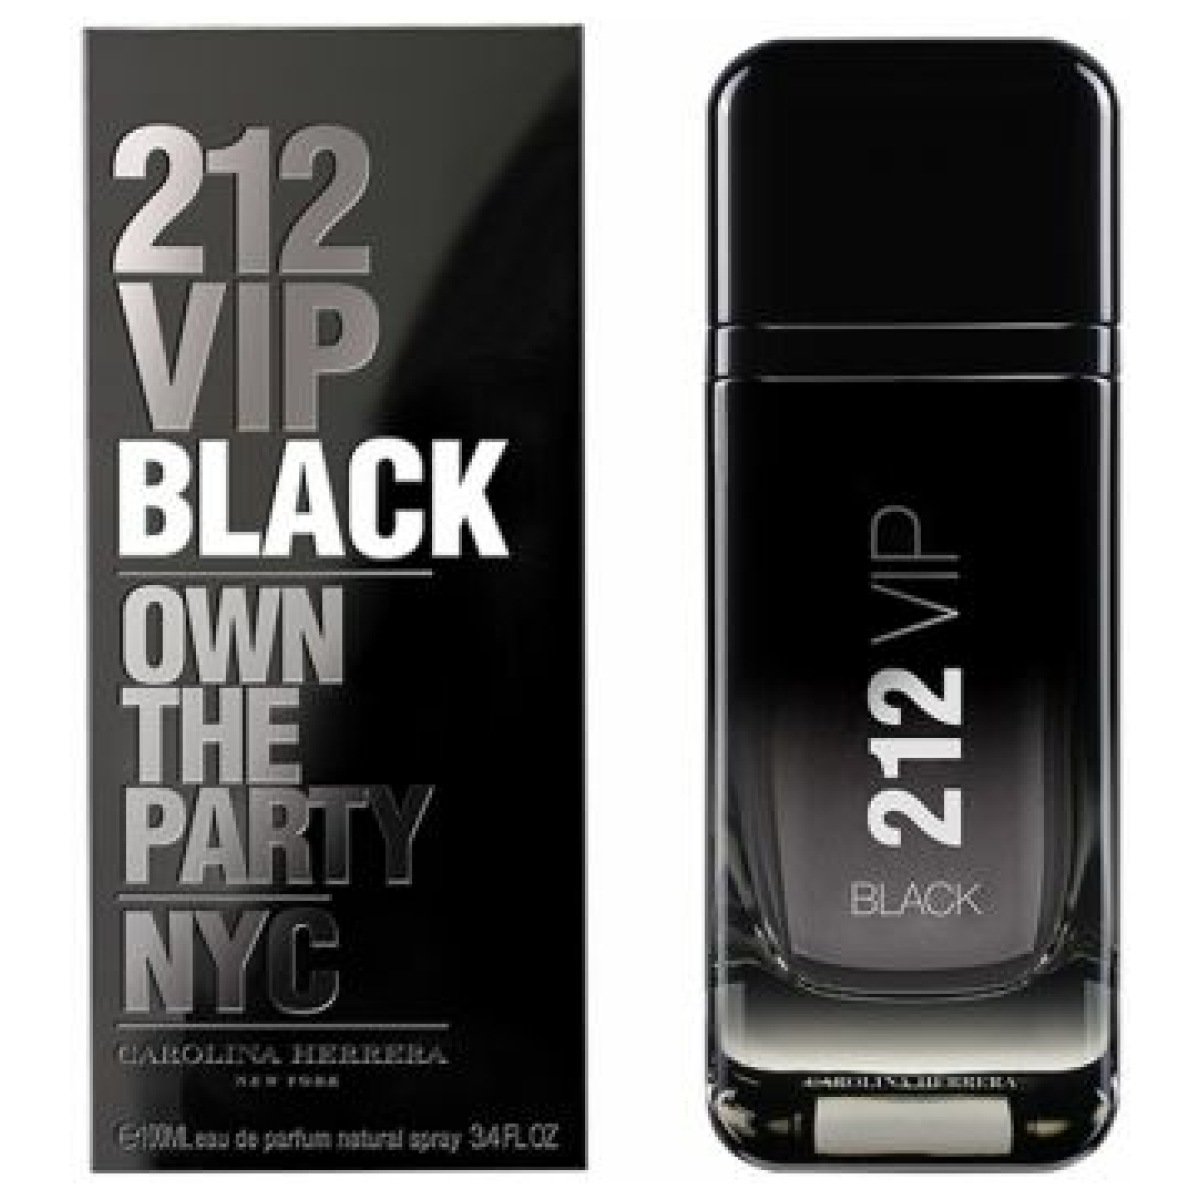 Carolina Herrera 212 Vip Black Own The Party Nyc Edt Perfume For Men 100Ml